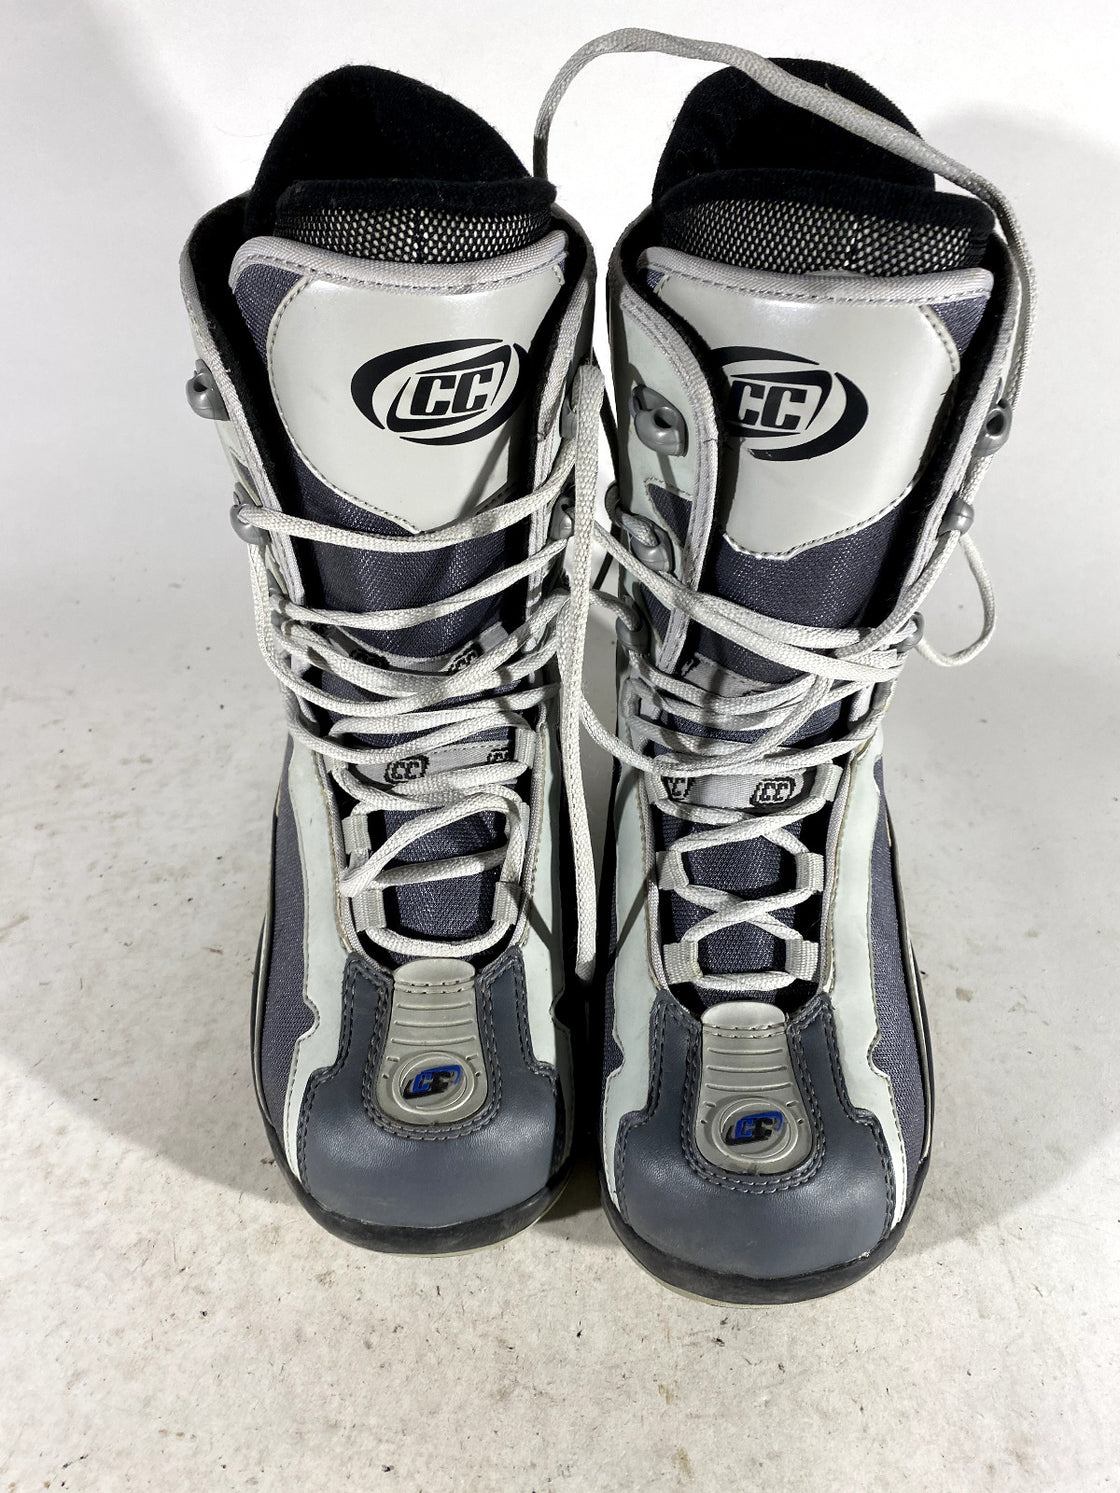 CRAZY CREEK Snowboard Boots Size EU42 US9.5 UK8 Mondo 270 mm